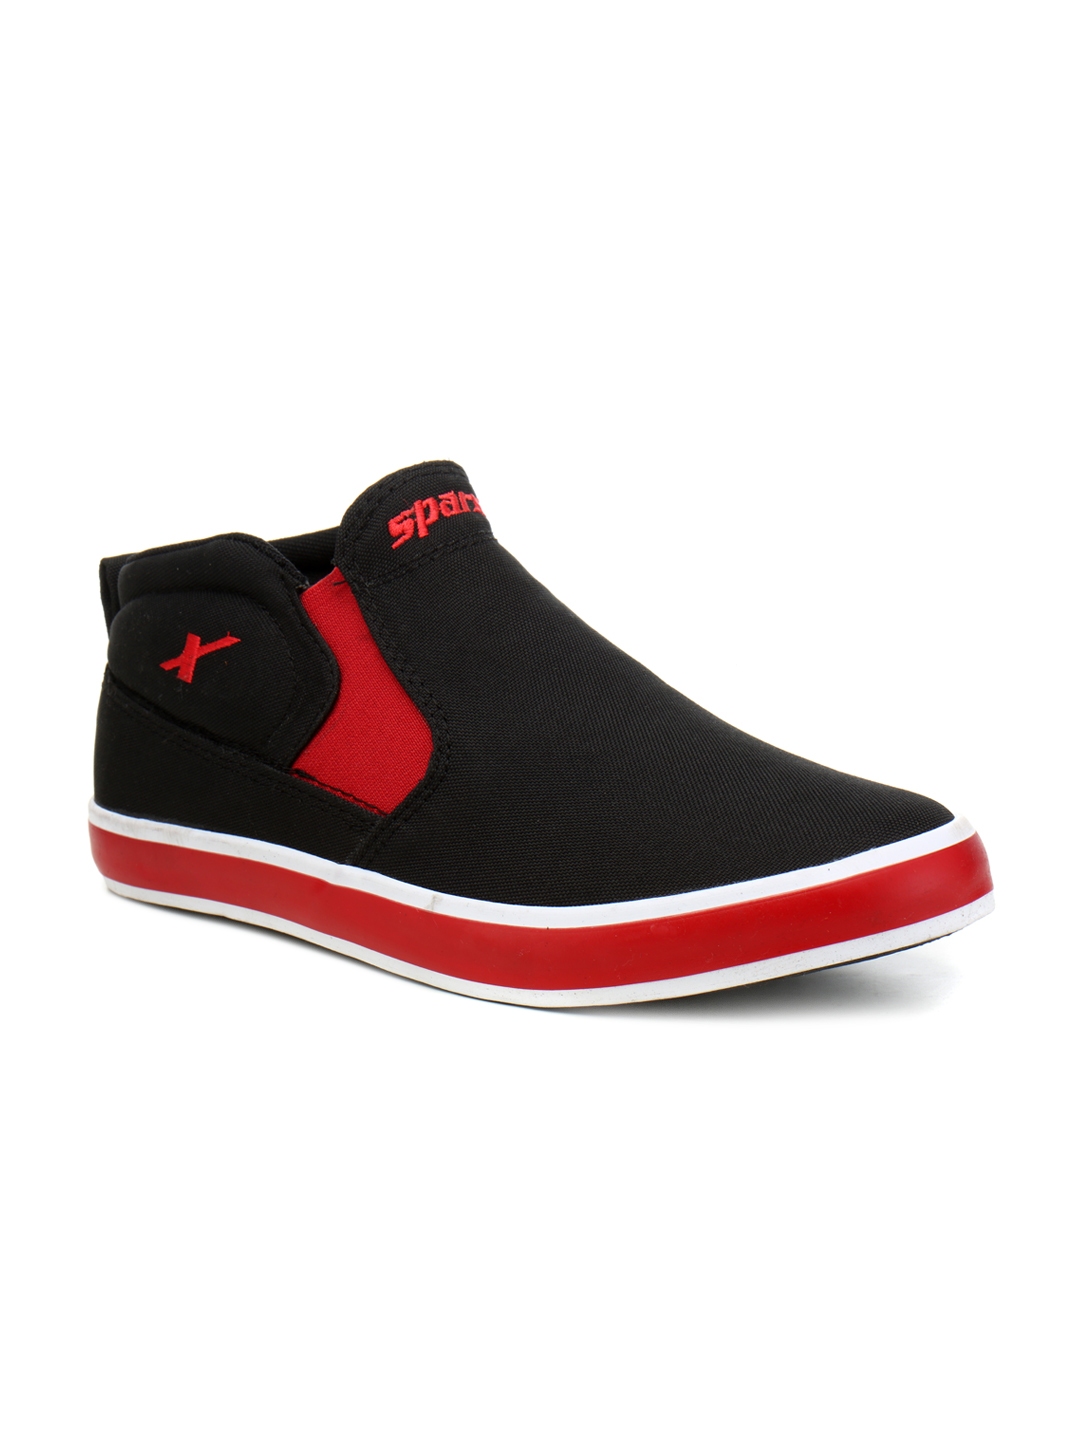 sparx red colour shoes